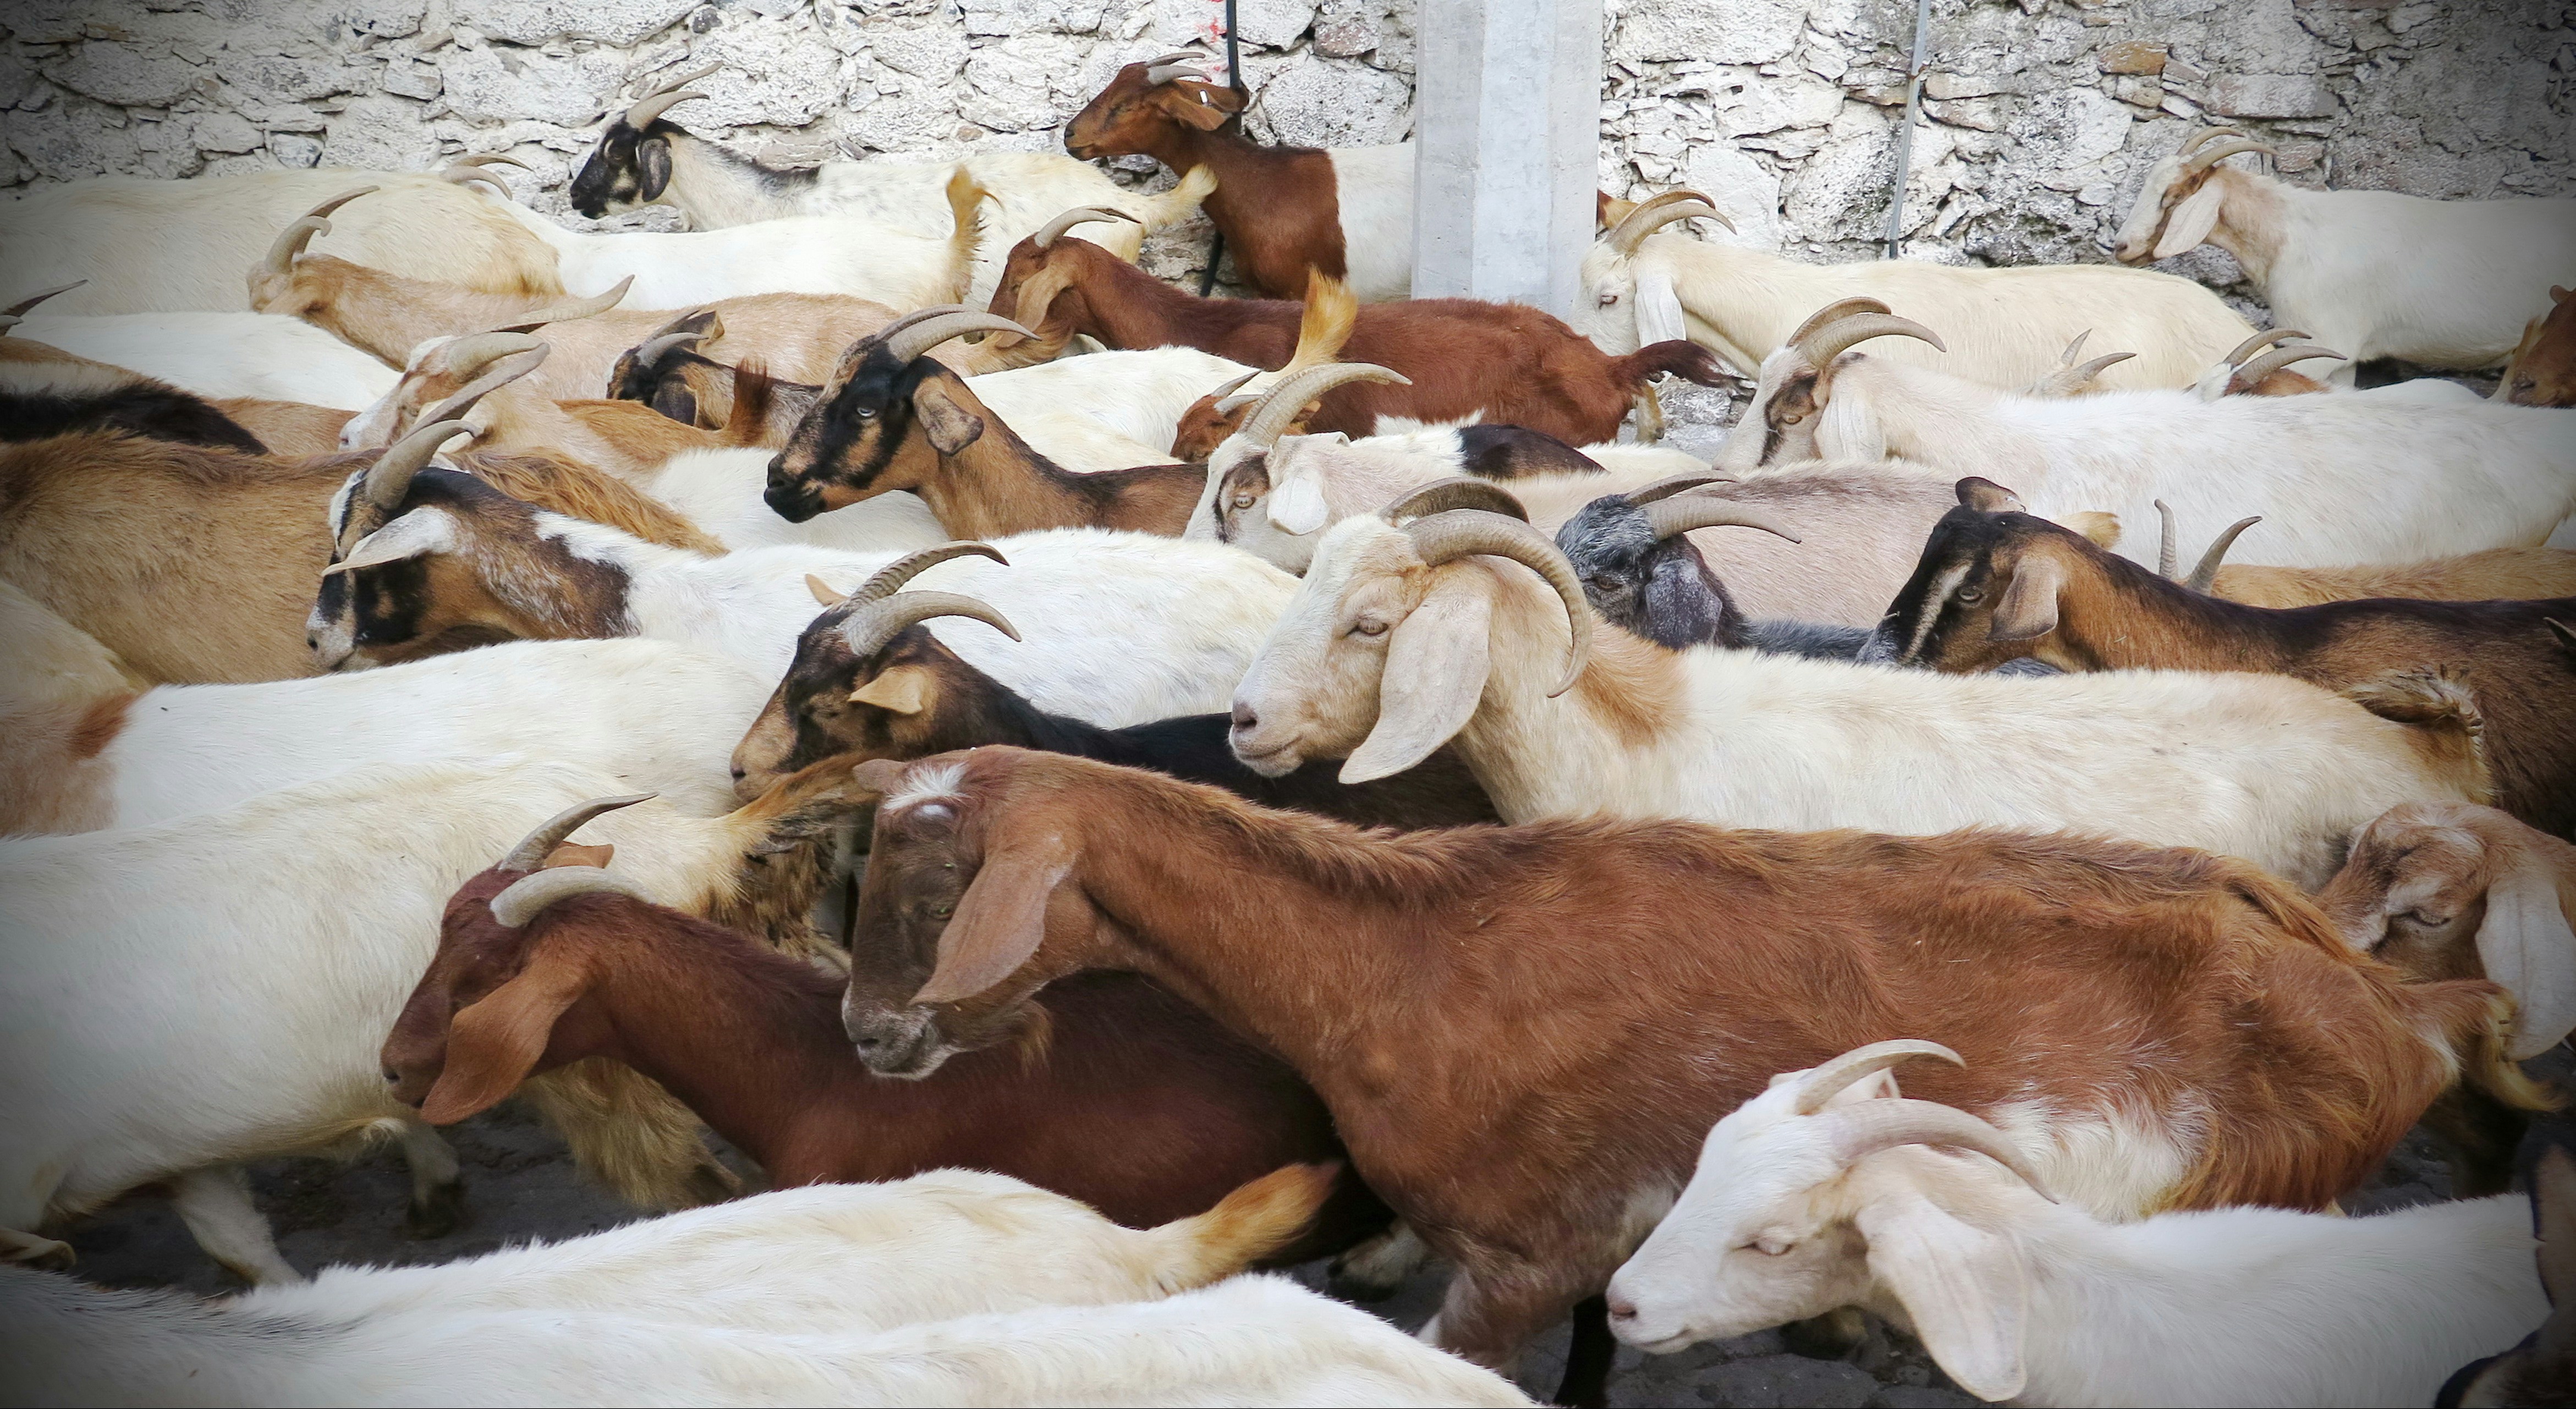 The herd of El Salitre, Guanajuato, Mexico